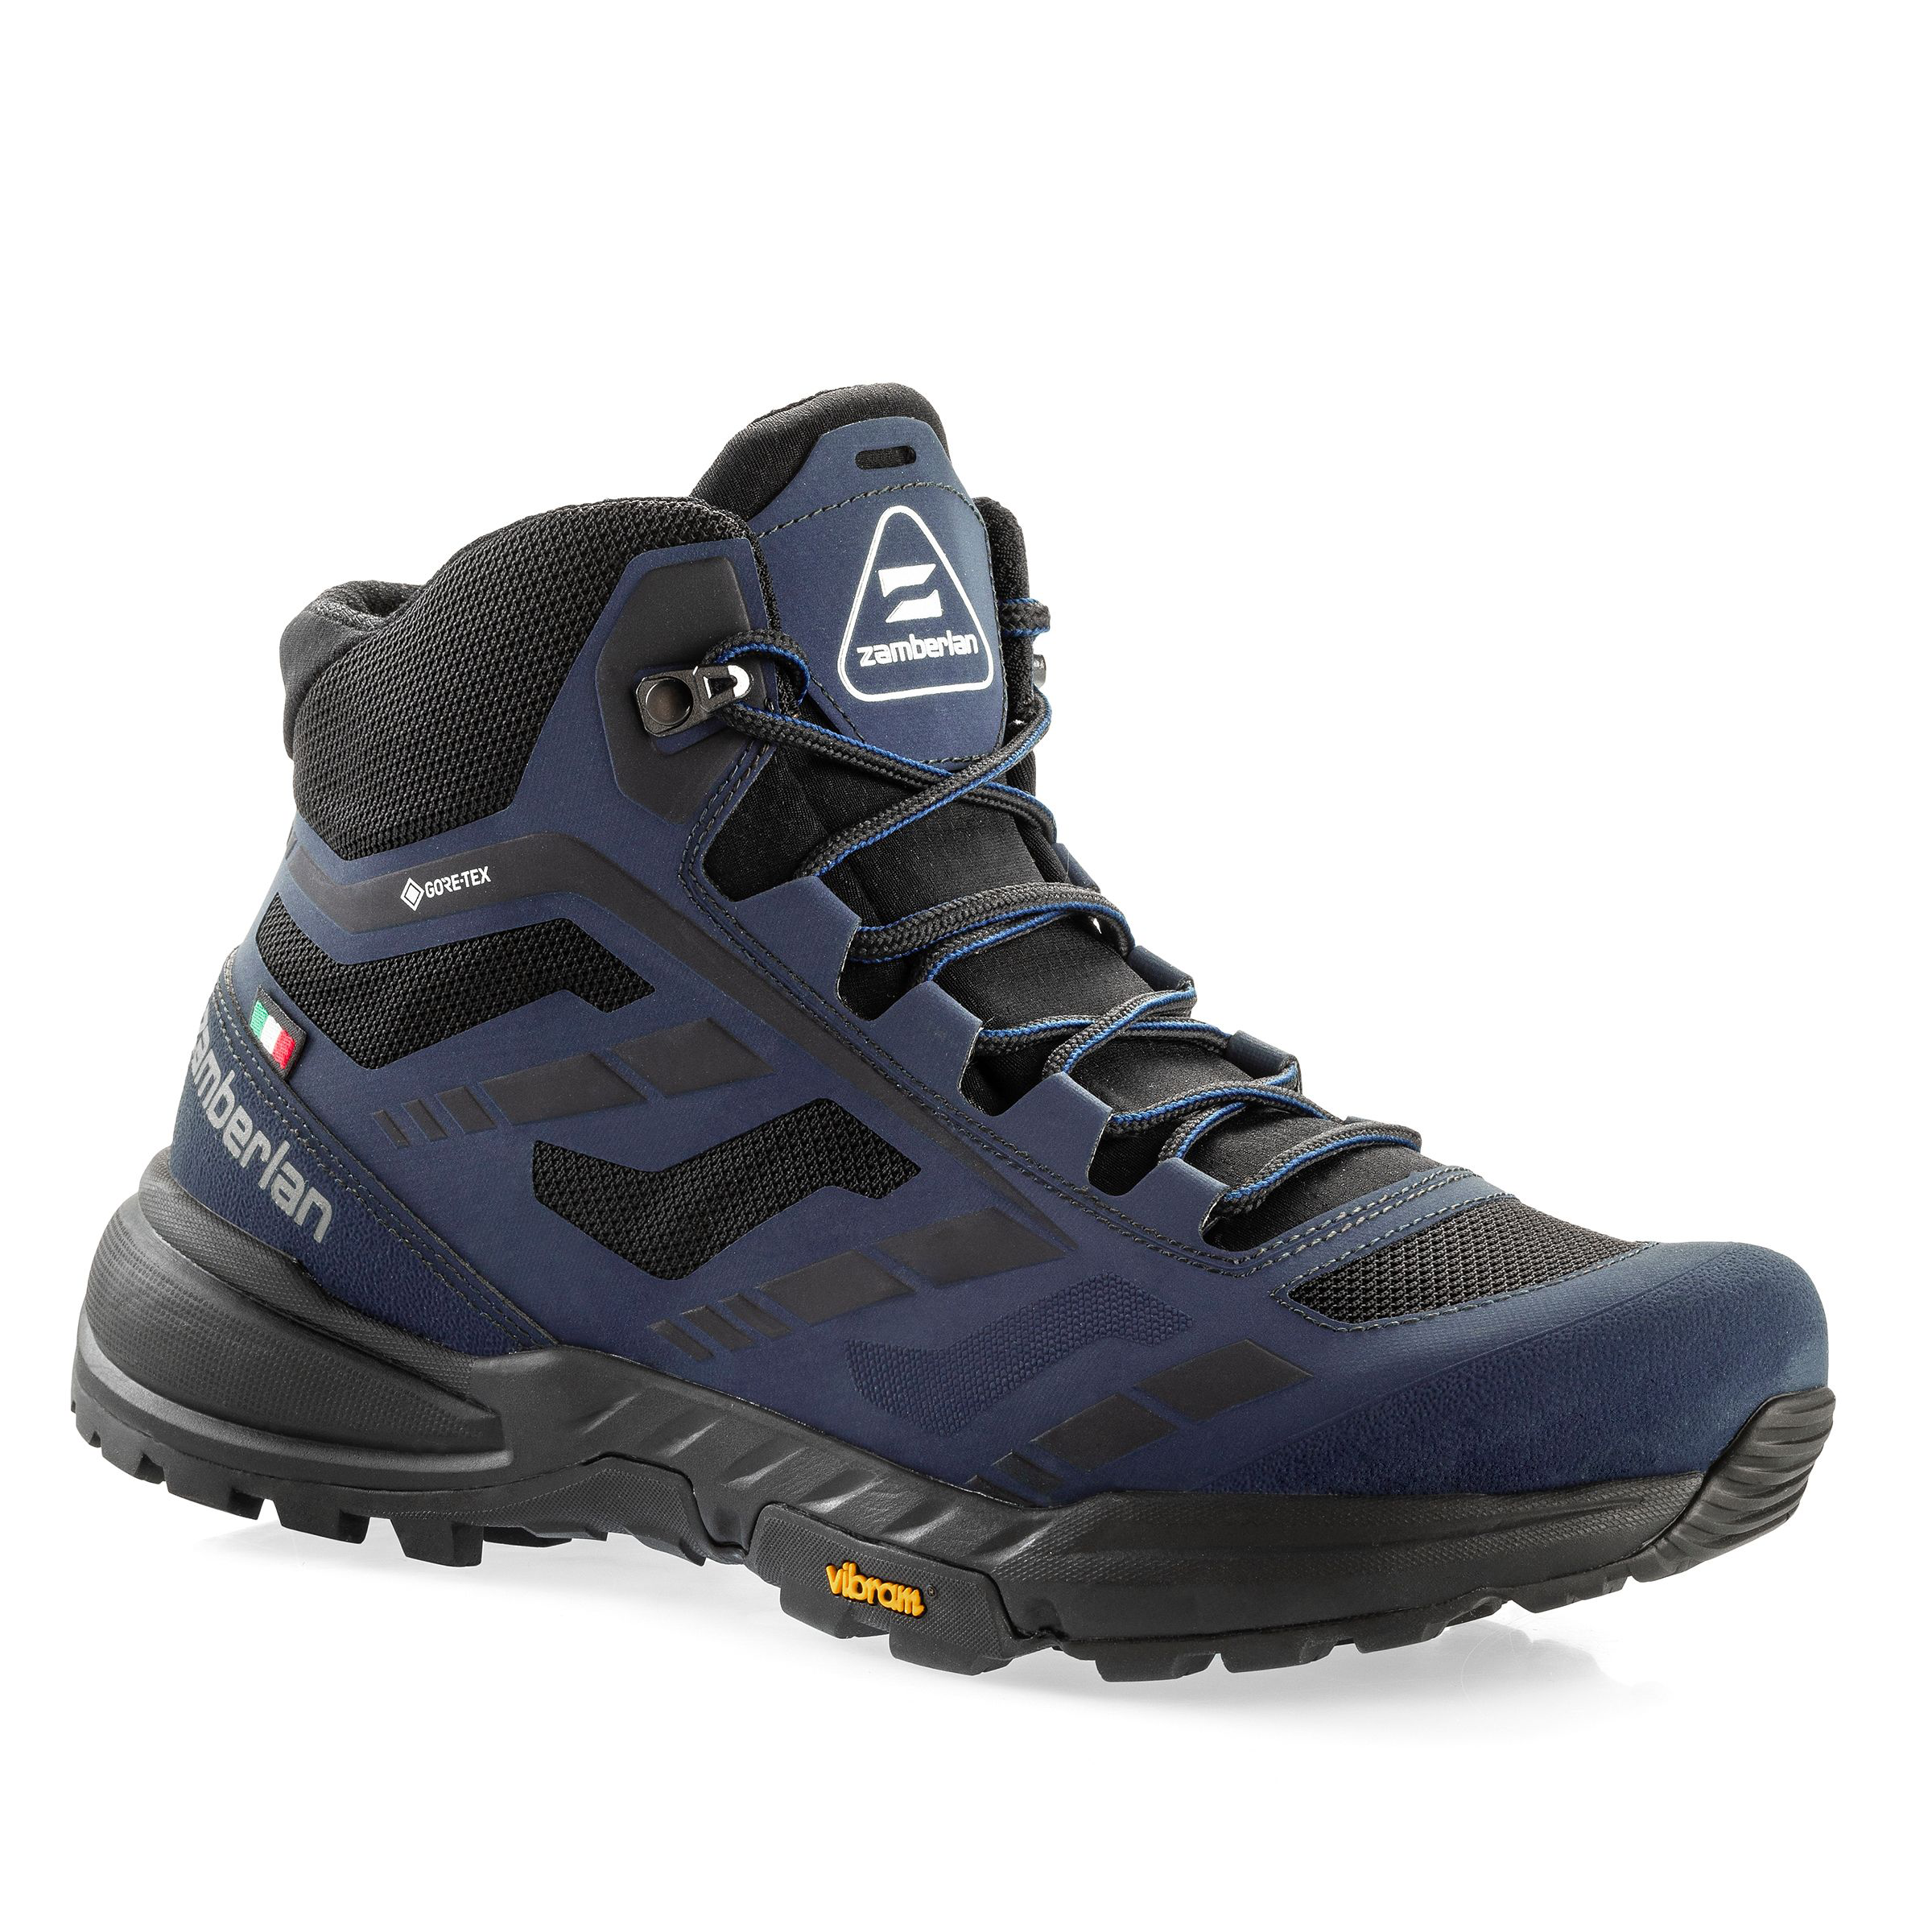 Zamberlan 219 Anabasis GTX Waterproof Mid Hiking Boots for Men - Blue - 8.5M